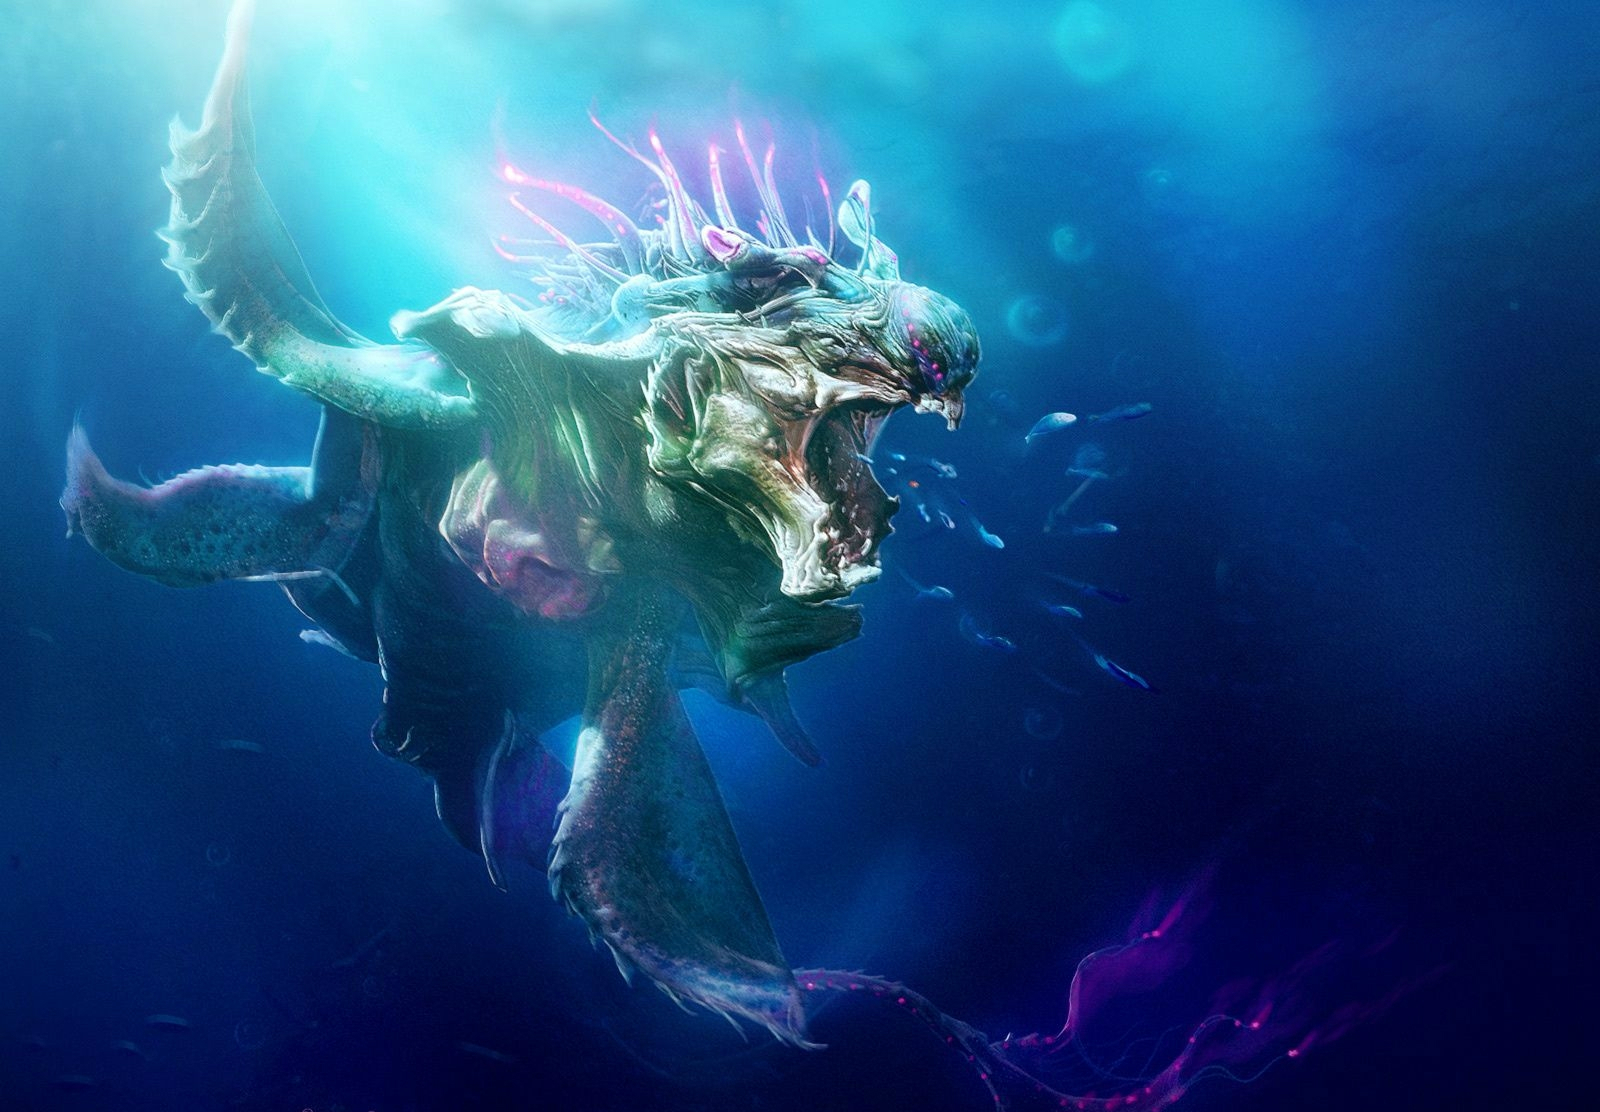 Fantasy sea monster set against a stunning backdrop.